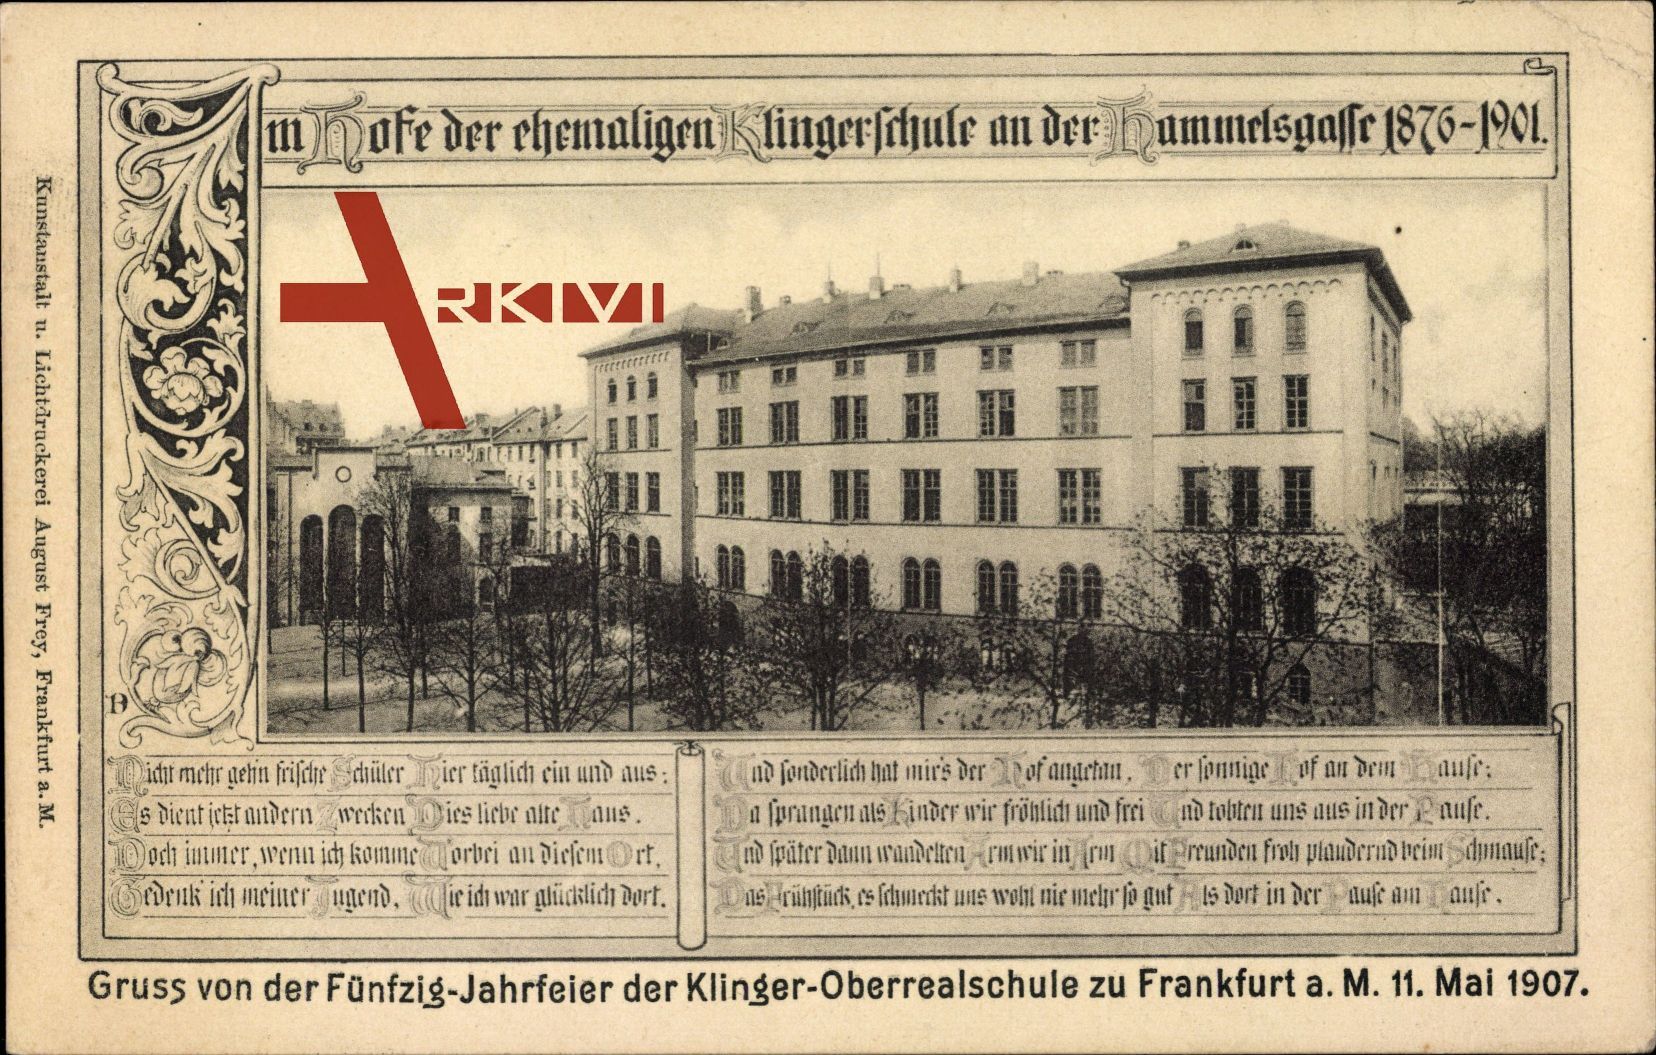 Frankfurt Main, 50 Jahrfeier, Klinger Oberrealschule, 1907, Hammelsgasse